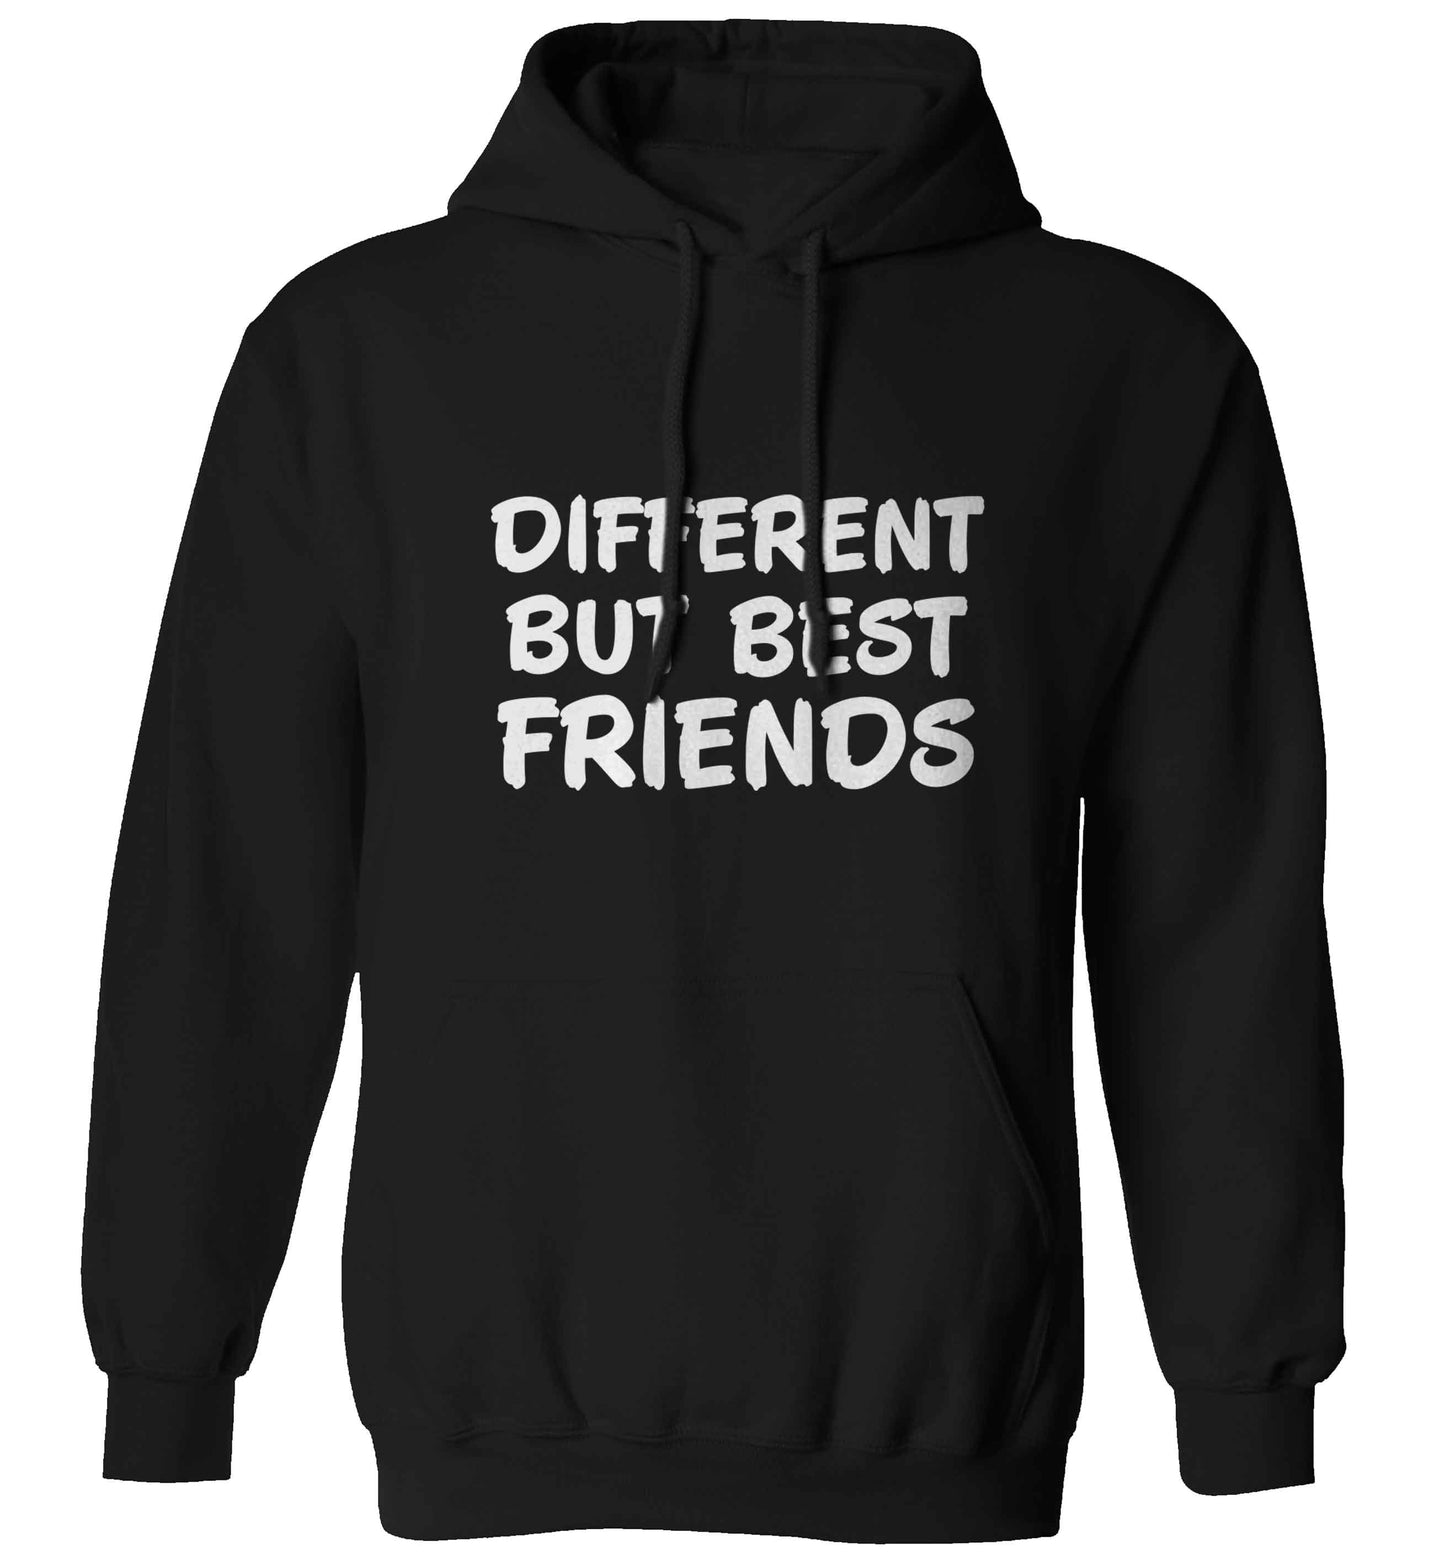 Different but best friends adults unisex black hoodie 2XL